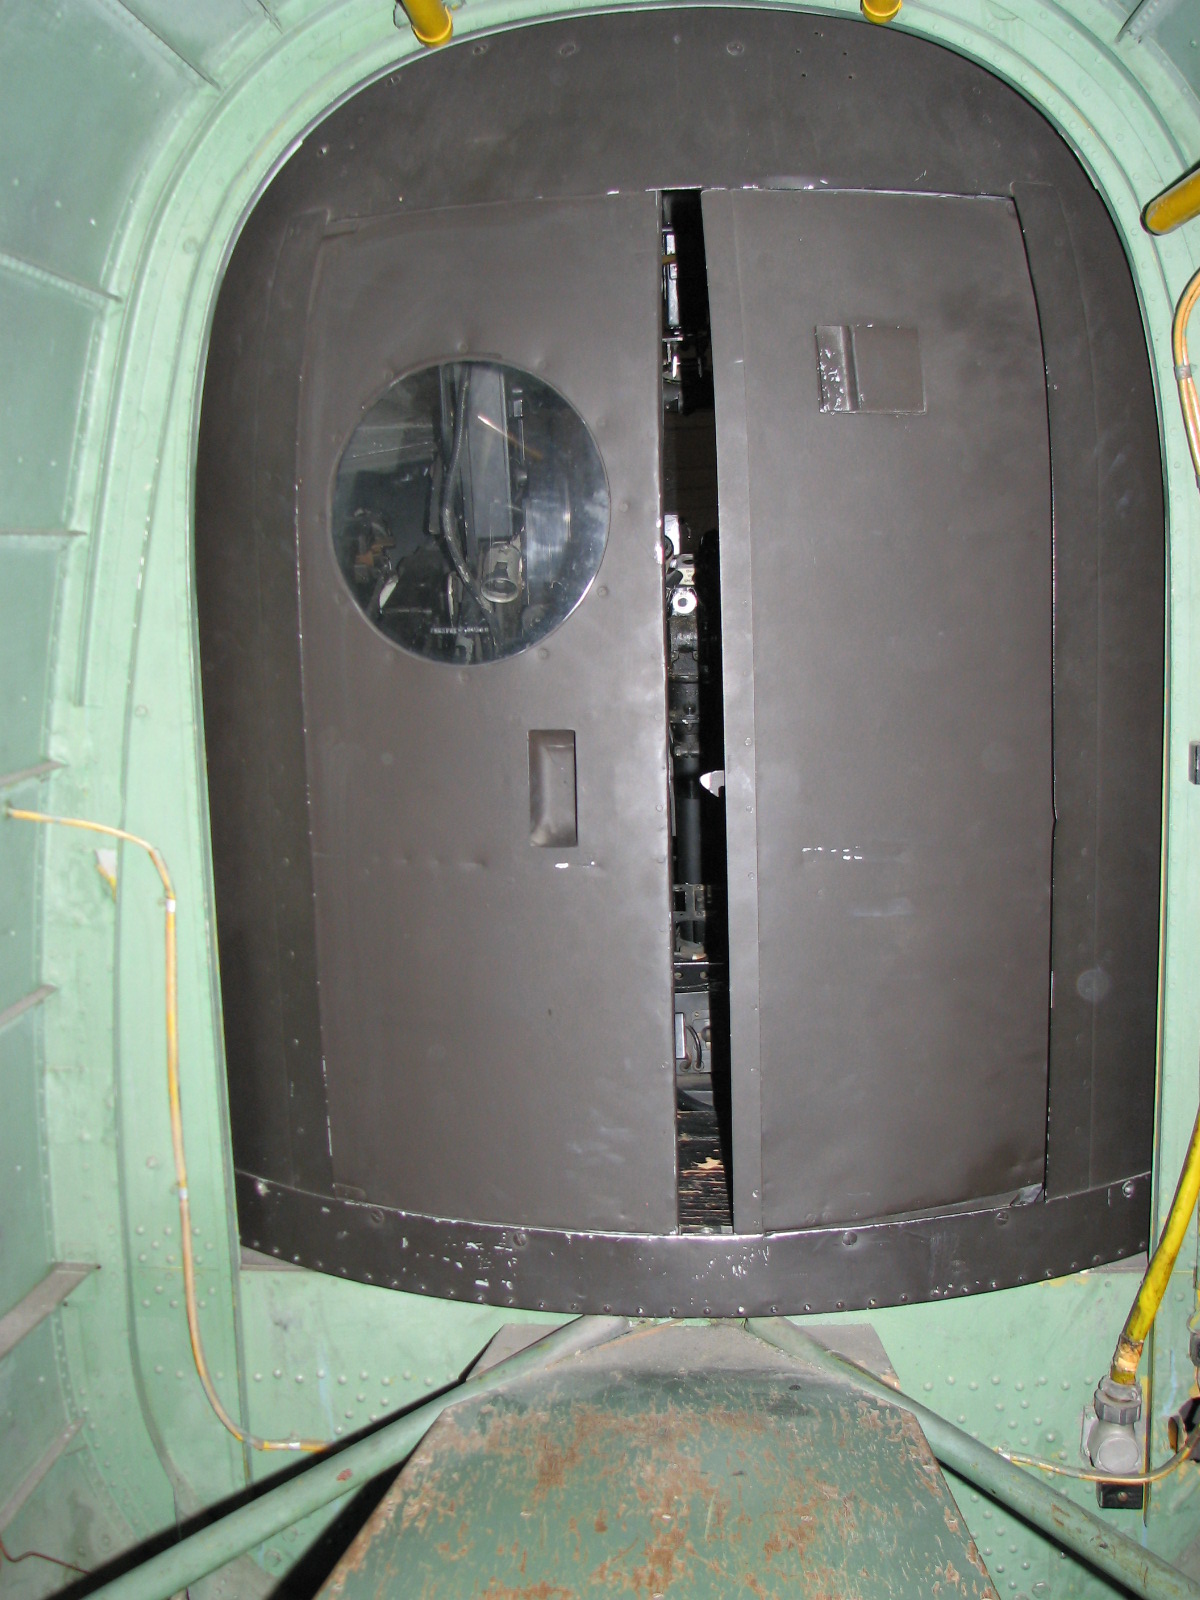 Lancaster rear turret doors closed